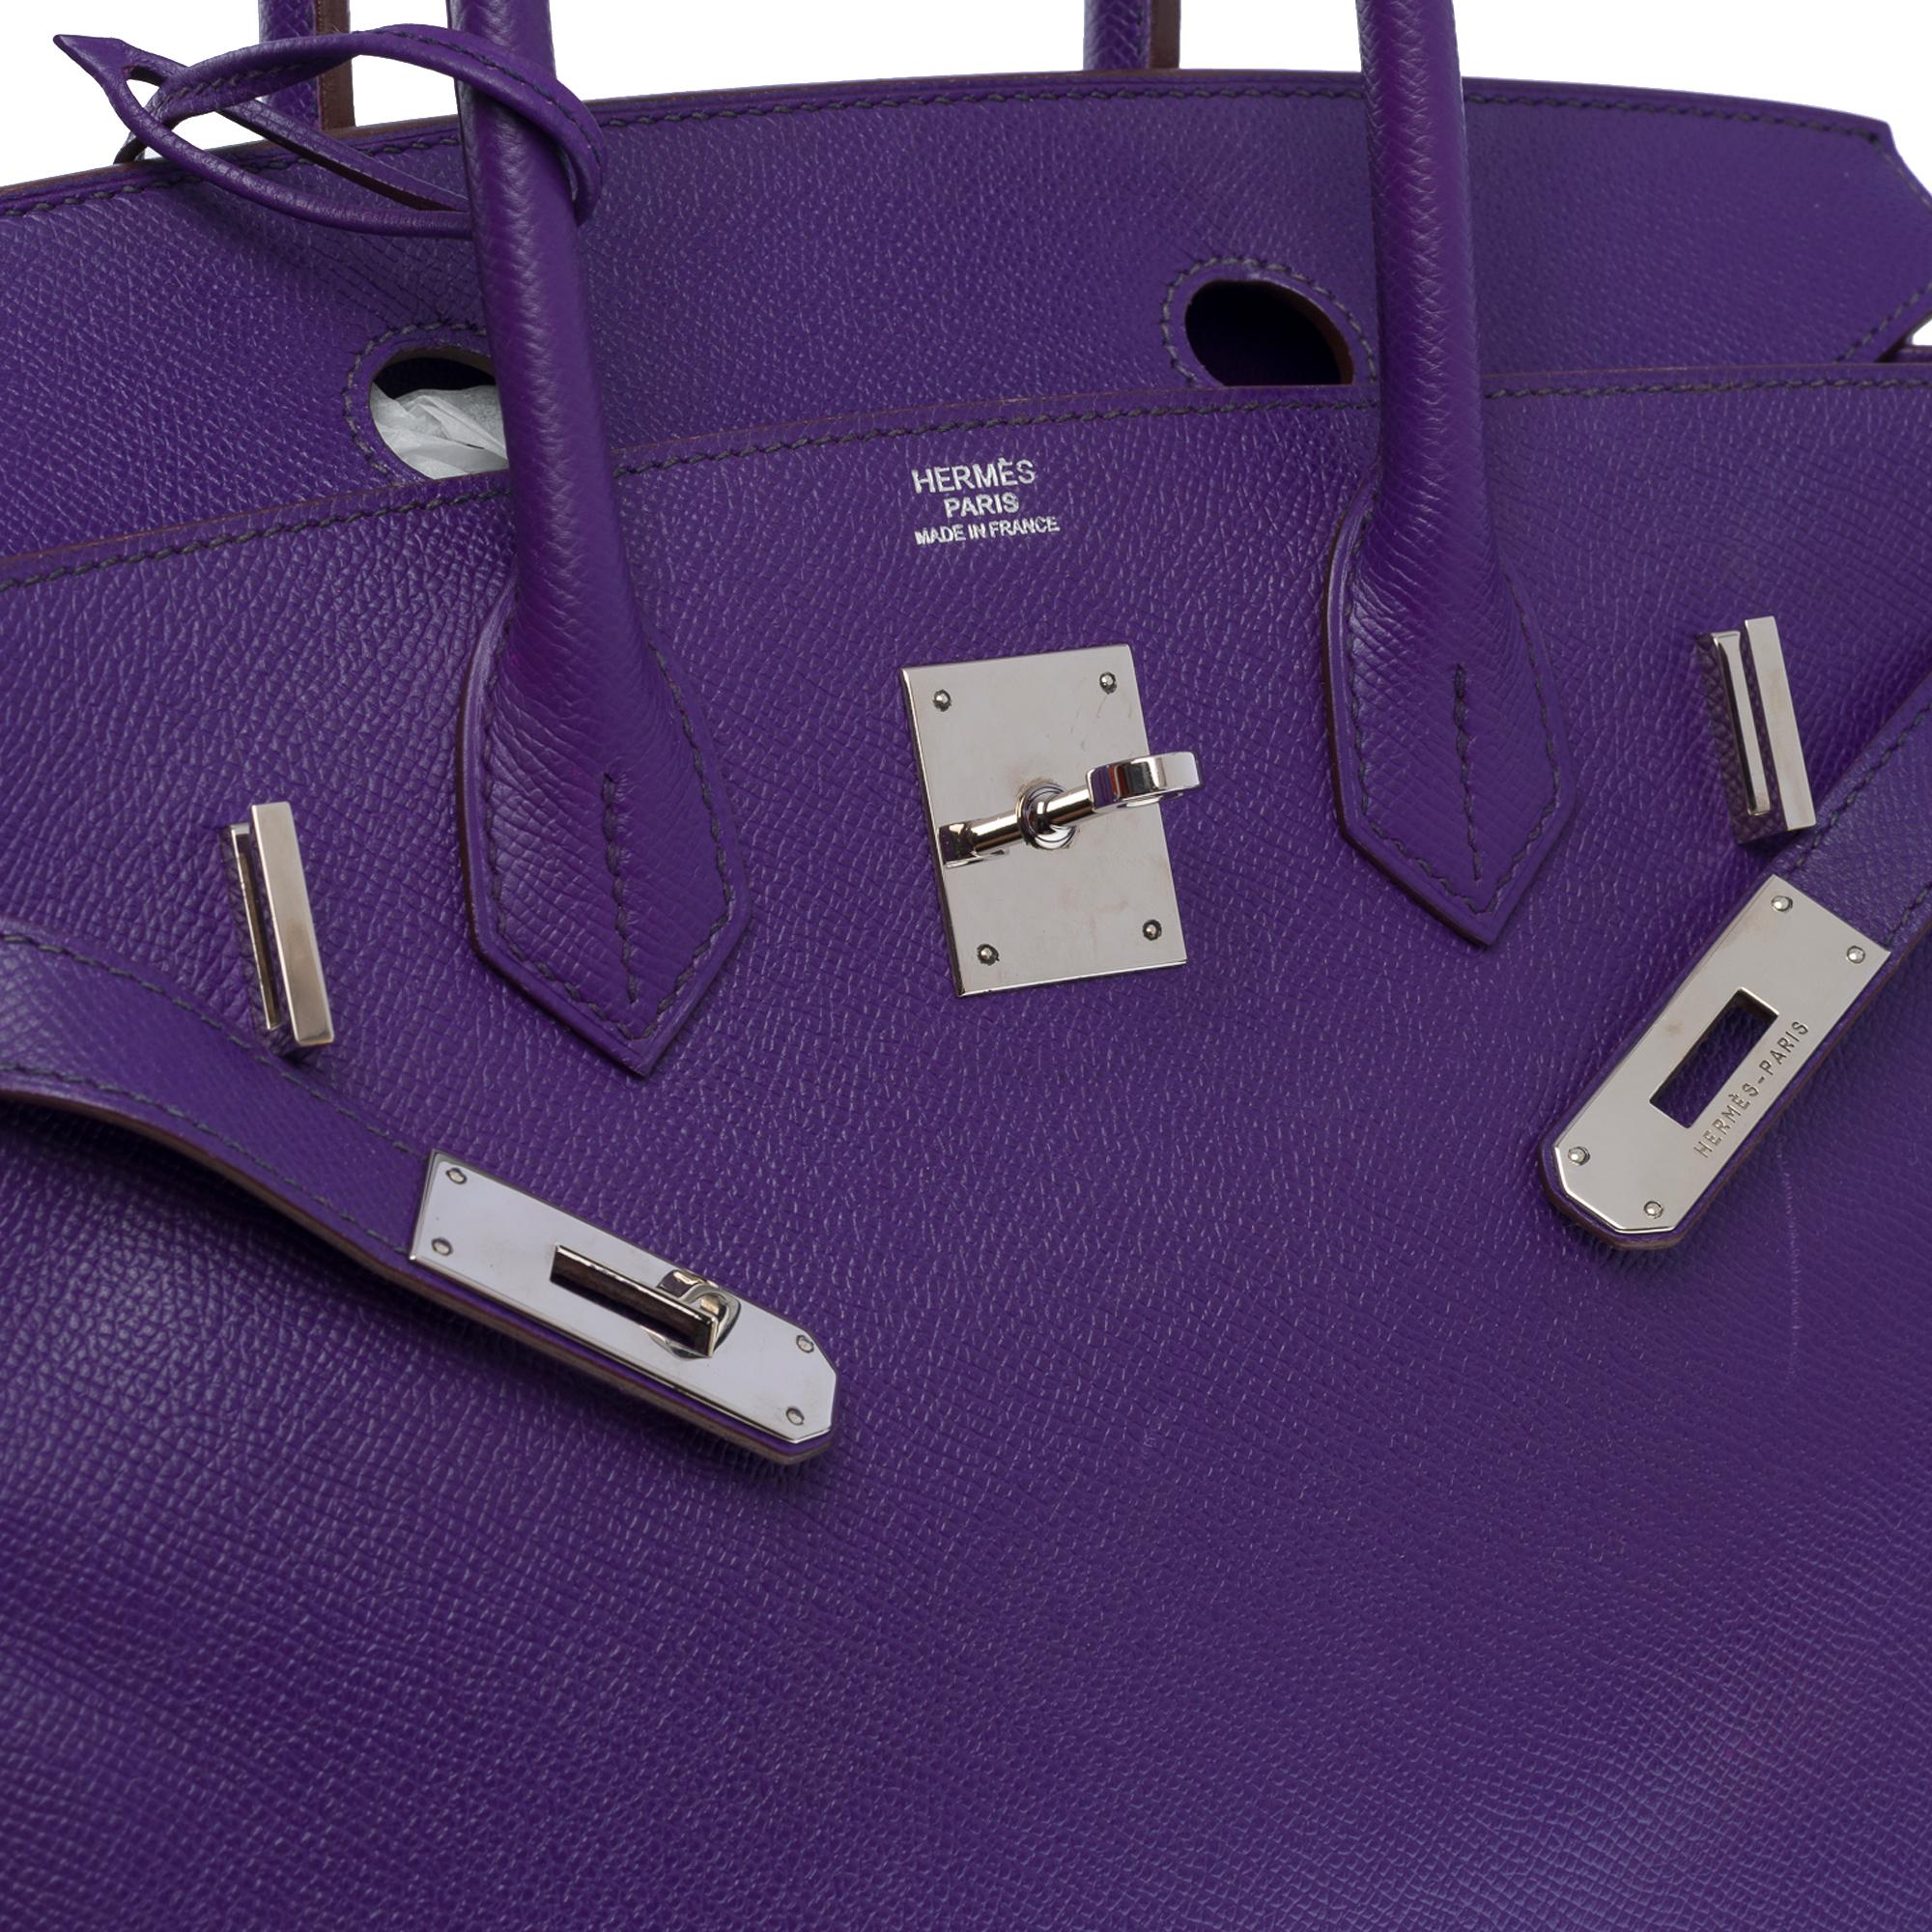 Amazing Hermès Birkin 30 handbag in Iris Epsom leather, SHW For Sale 1